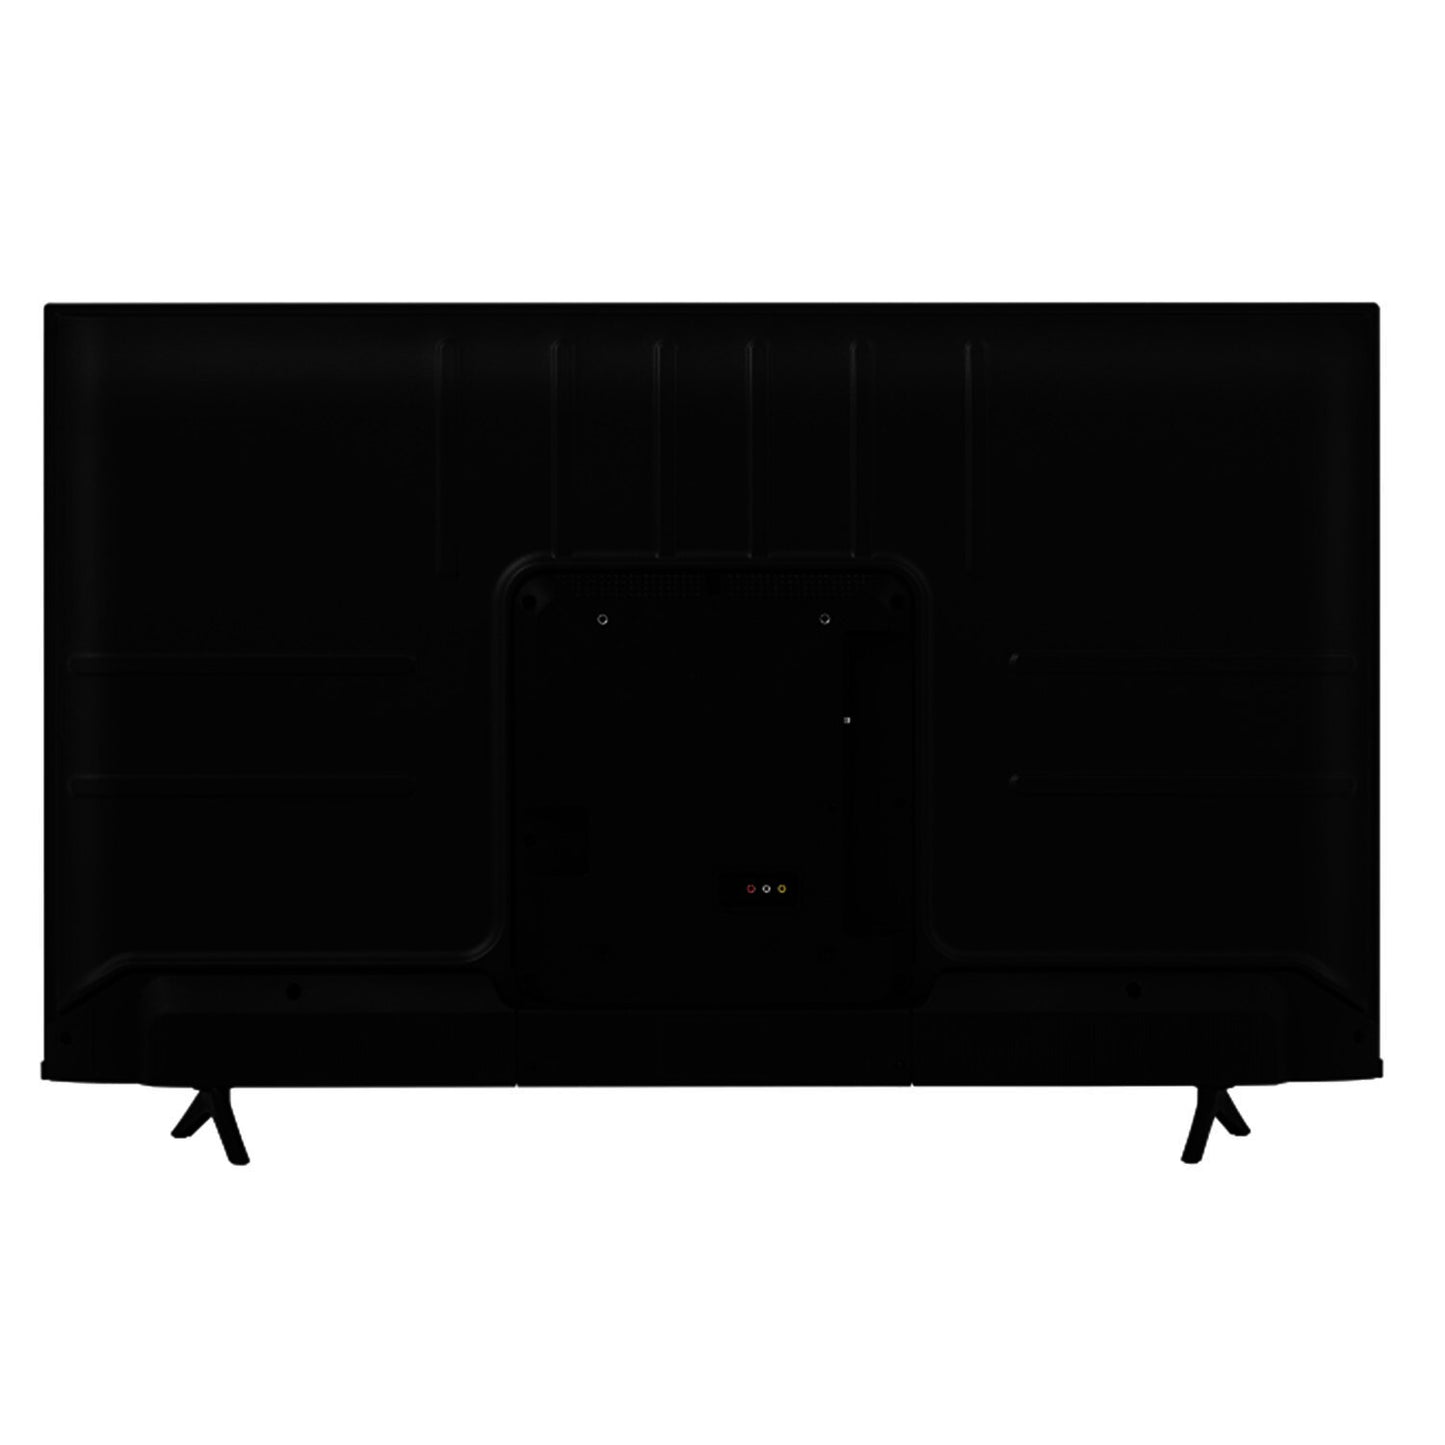 Hisense 70 Inch UHD 4k Smart Tv 70A6K With Free Wall Bracket